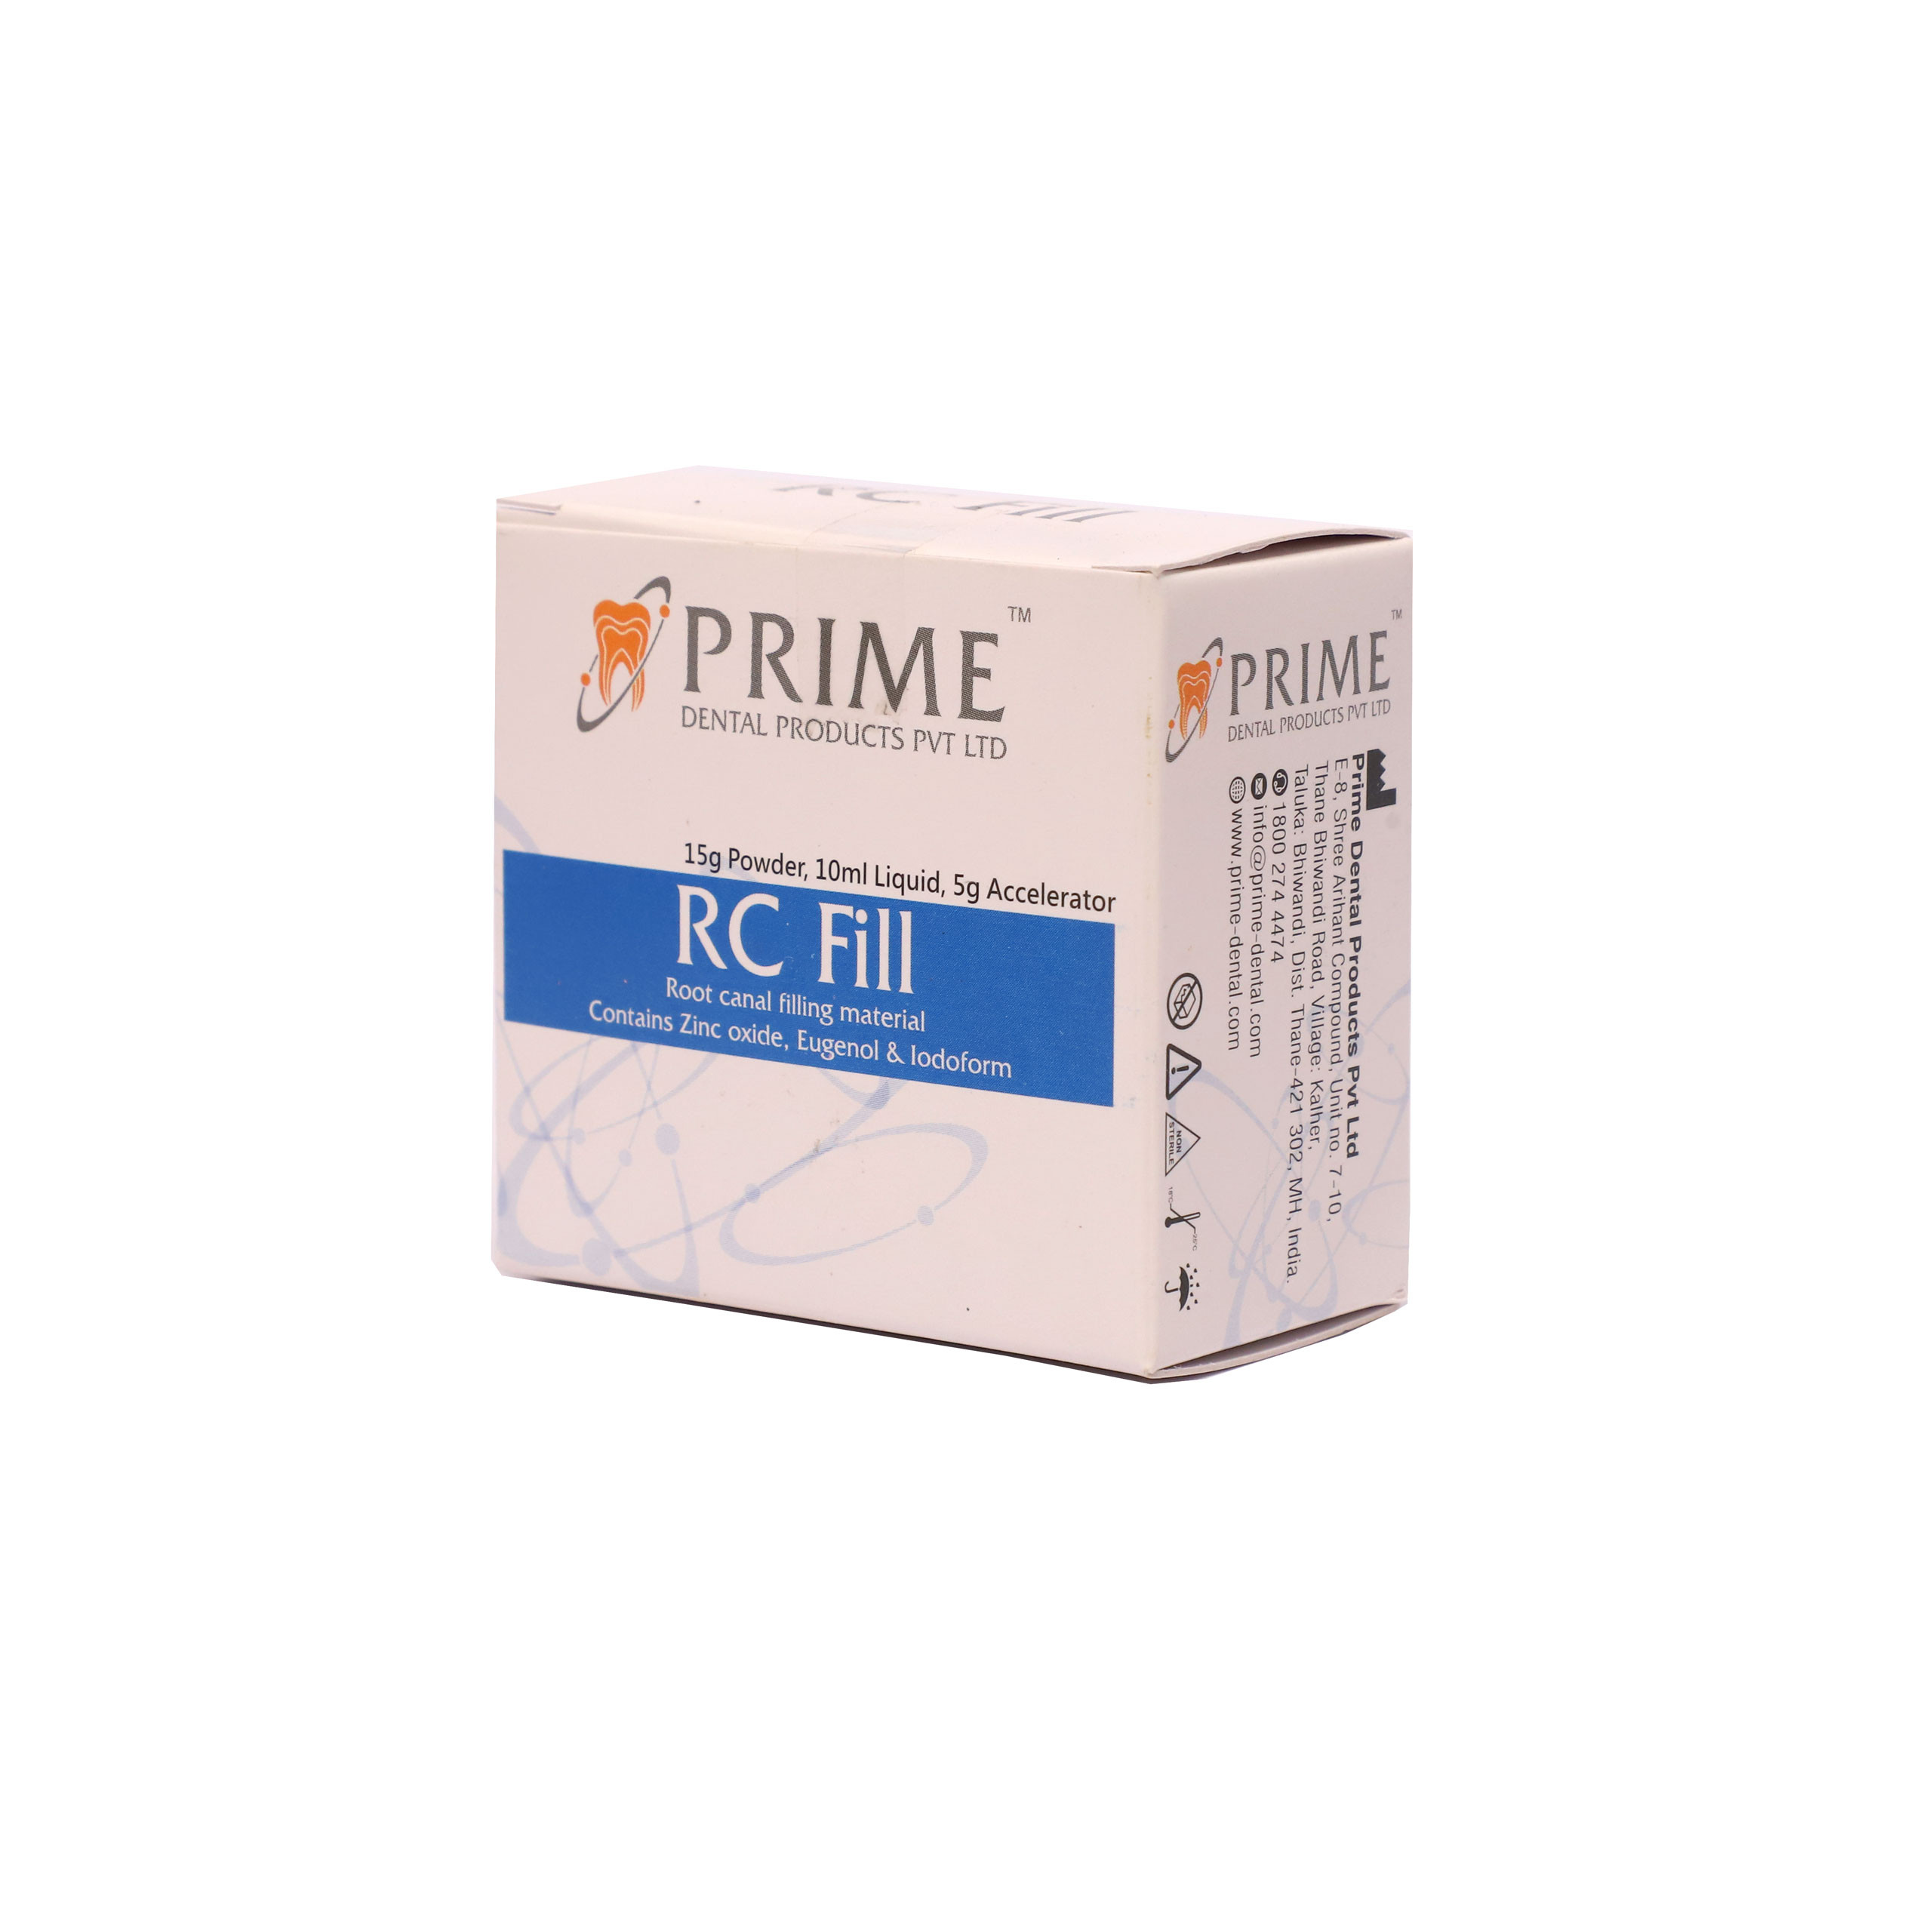 Prime RC Fill 15g Powder, 10ml Liquid, 5g Accelerator